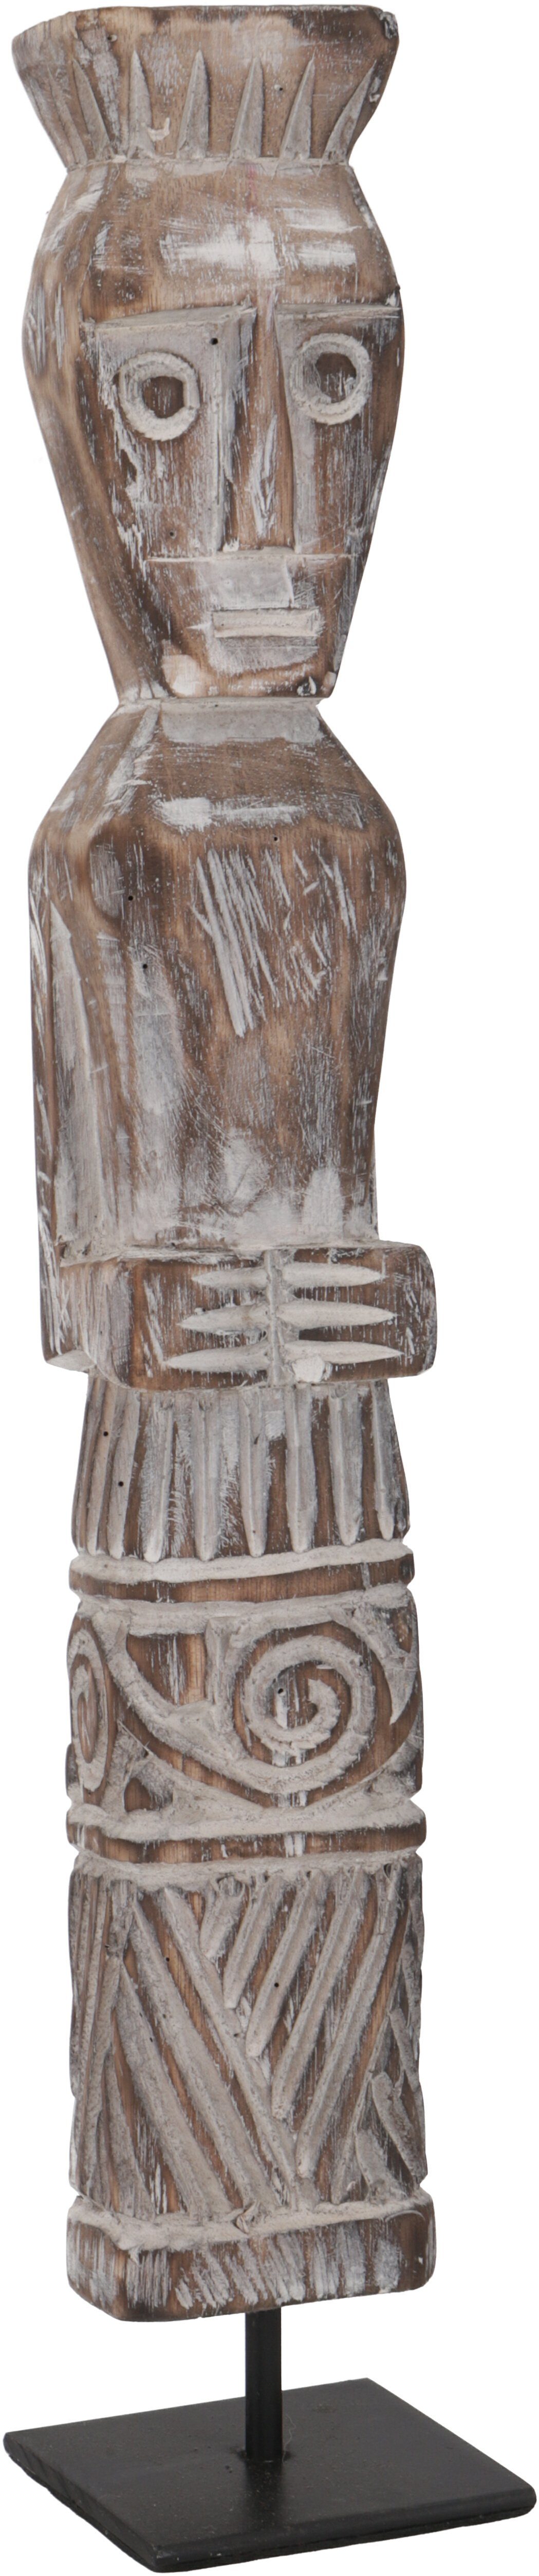 Guru-Shop Dekofigur Holzfigur, Skulptur, Schnitzerei im primitiv